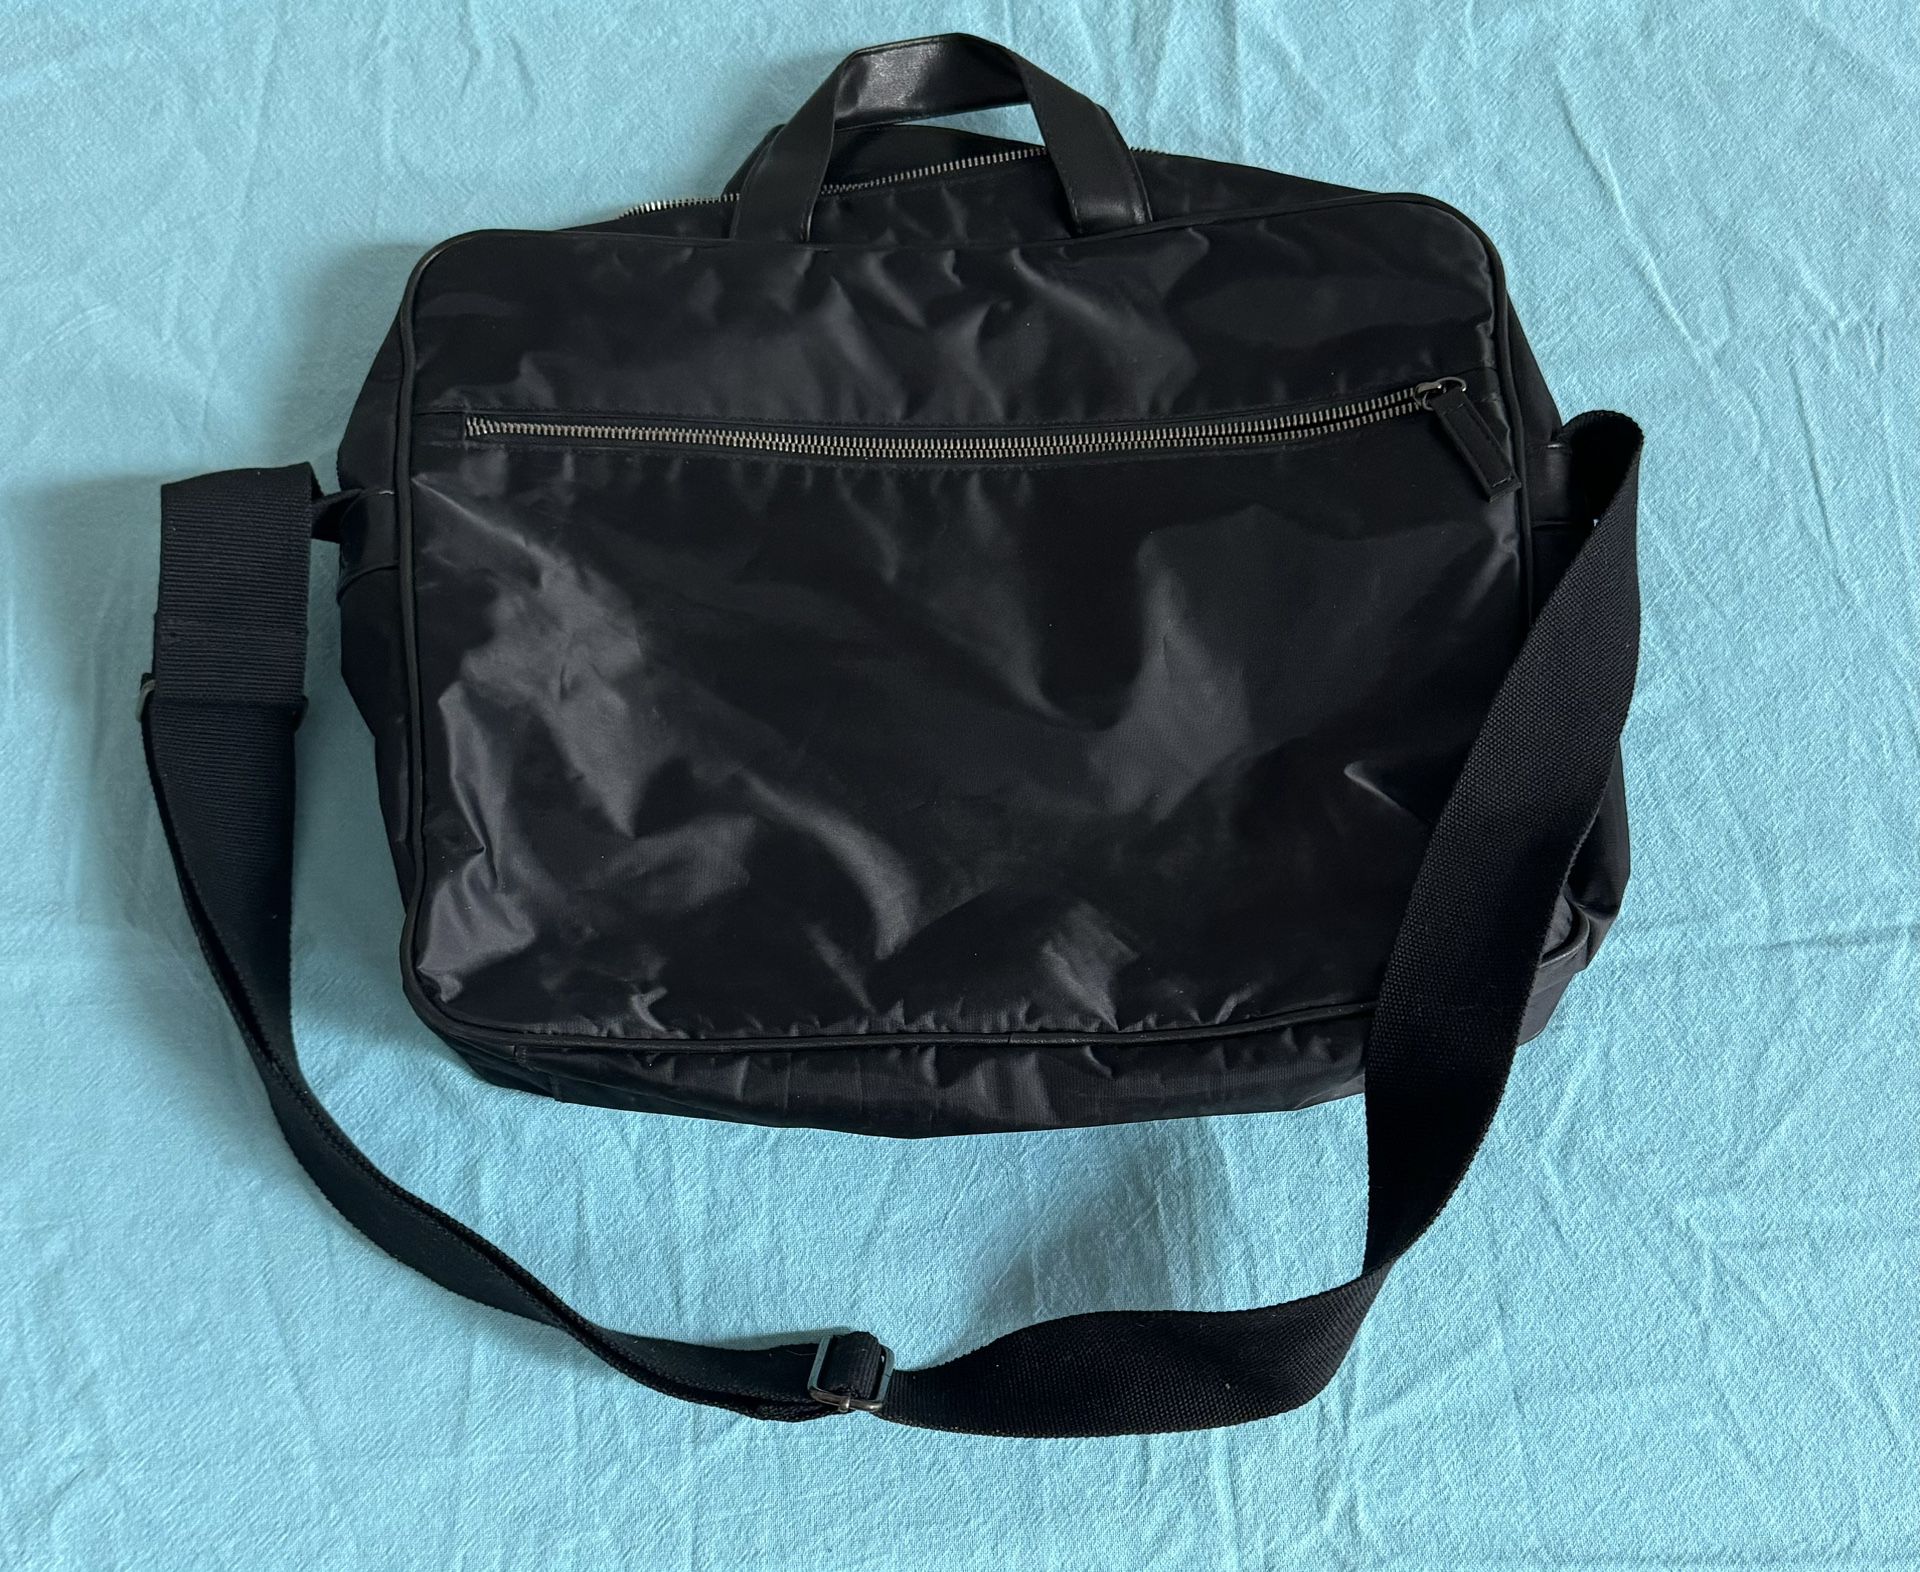 Black Laptop Bag With Shoulder Strap just $3 xox